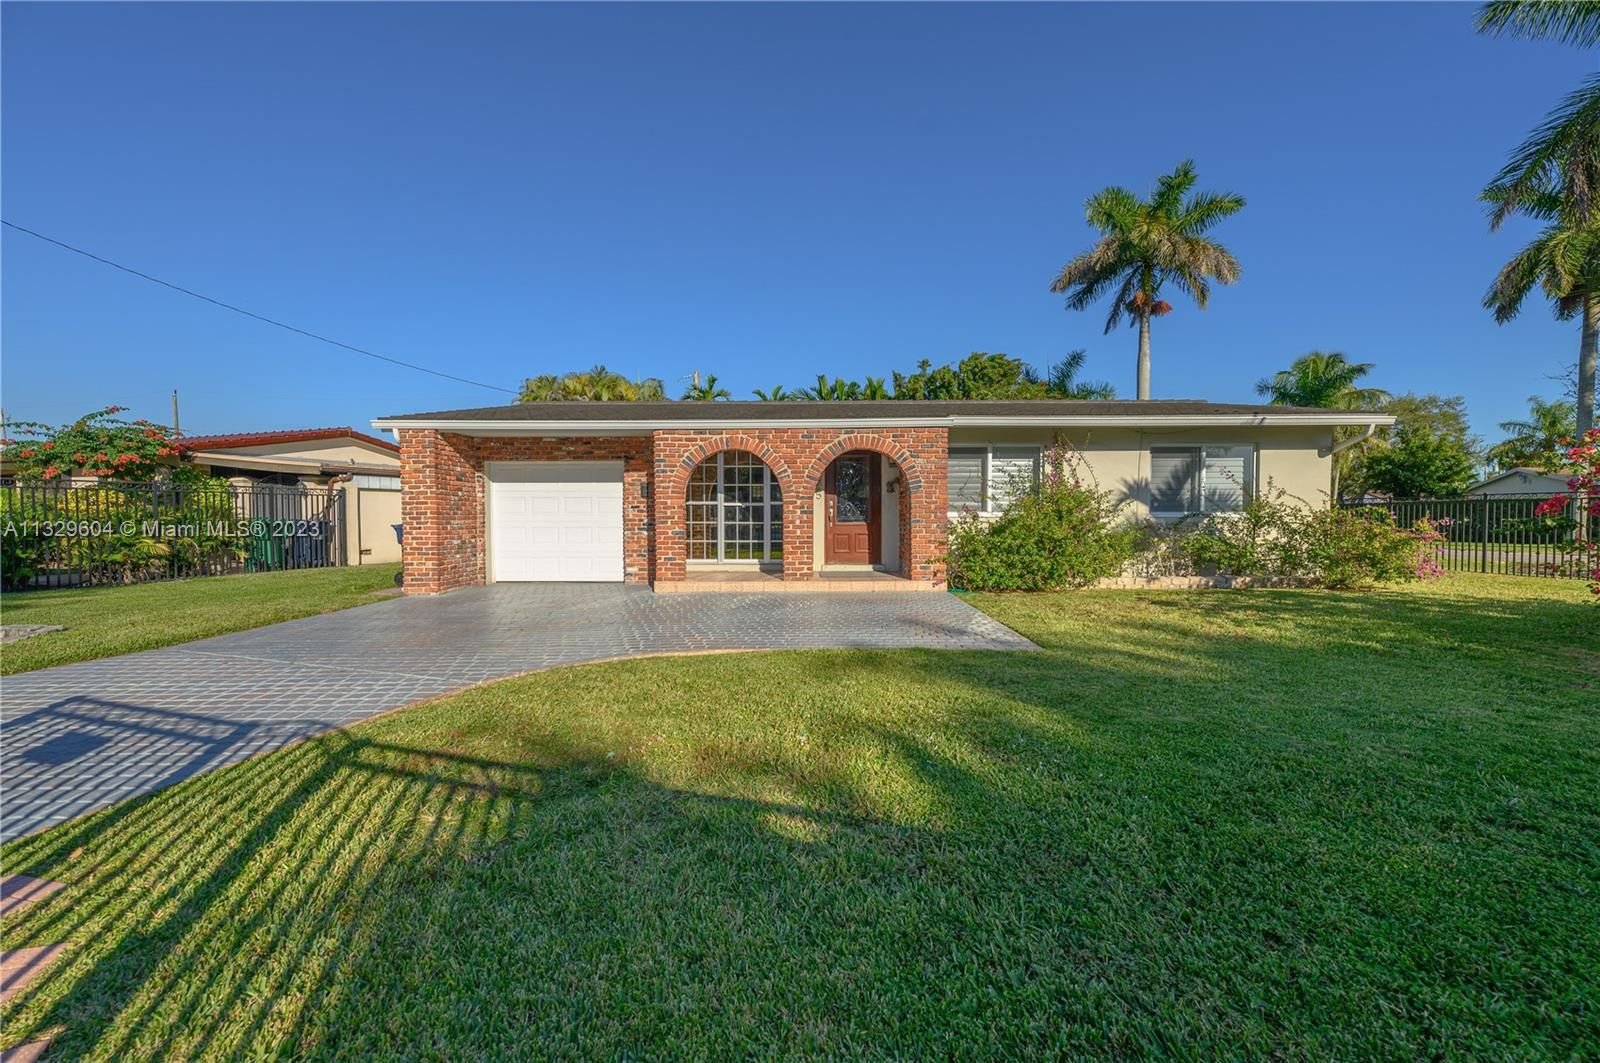 Real estate property located at 4655 94th Ct, Miami-Dade County, Miami, FL